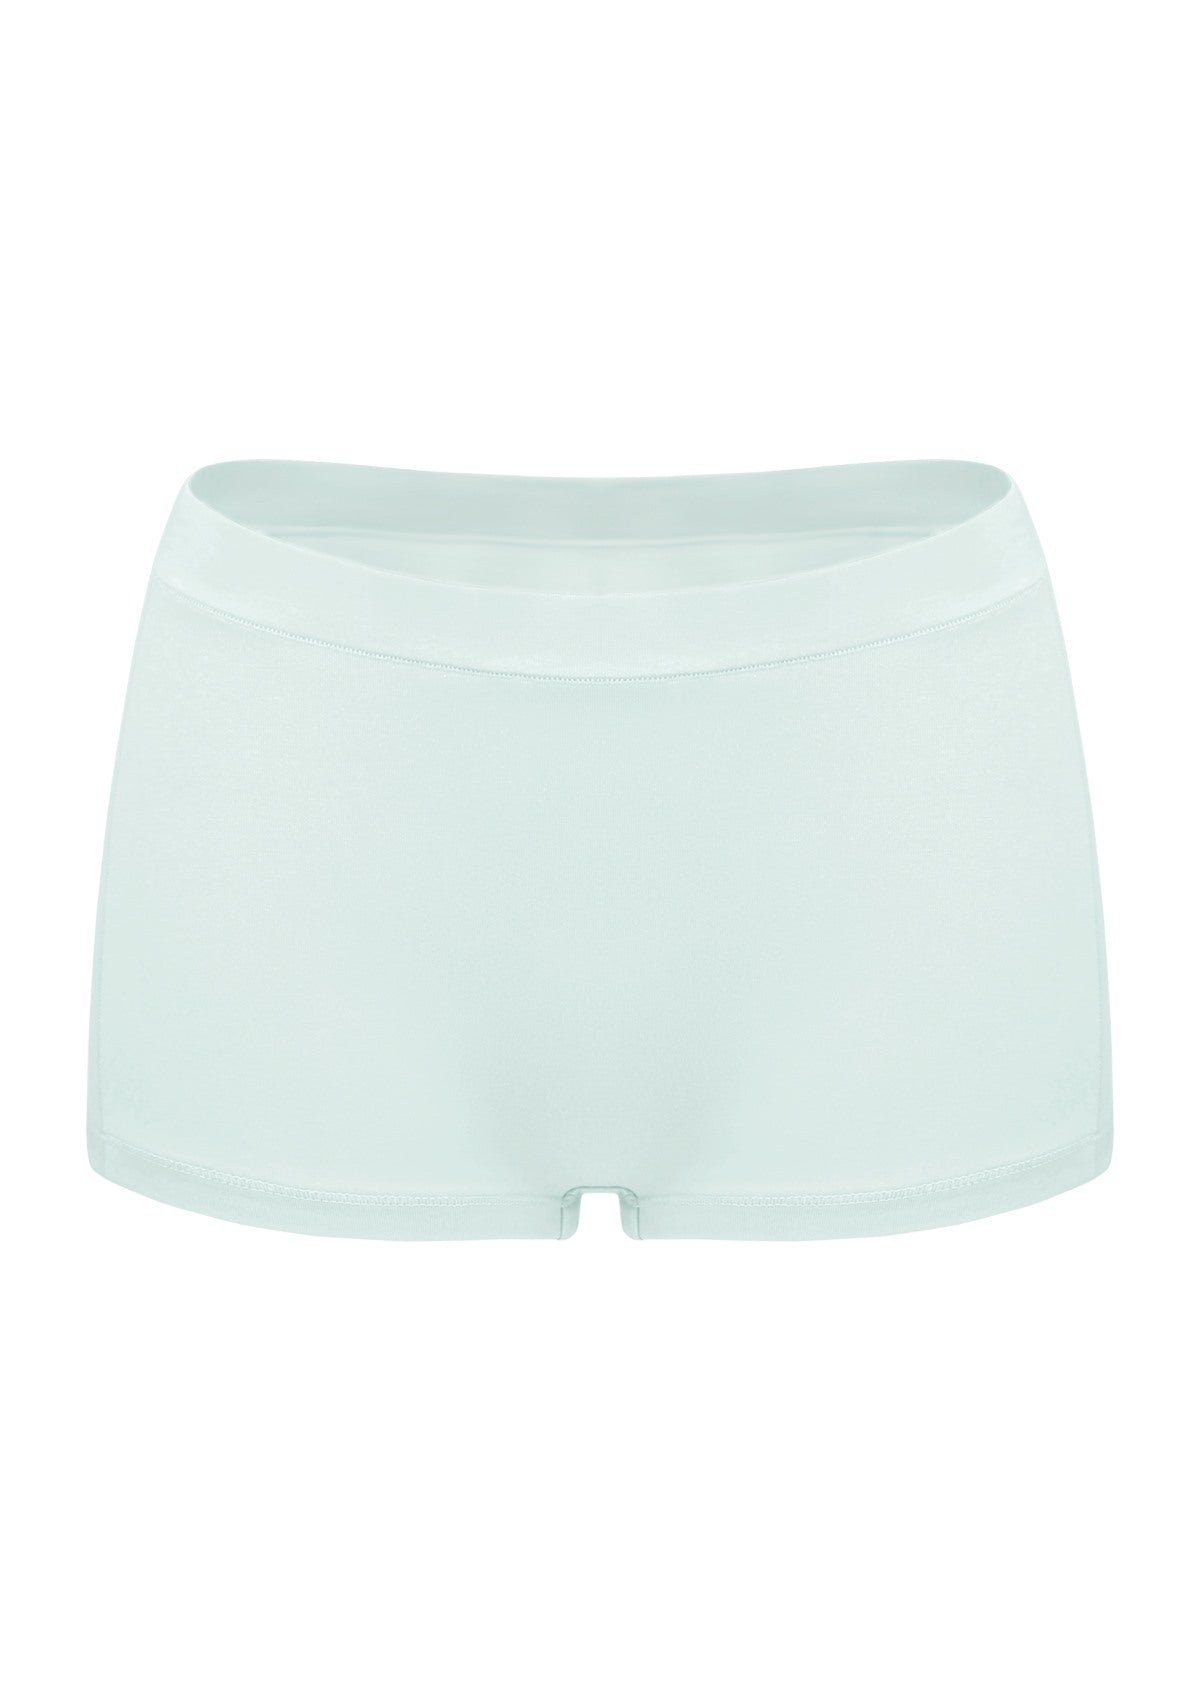 All-Day Comfort Mid-Rise Cotton Boyshorts Underwear 3 Pack - L / Black+White+Beige